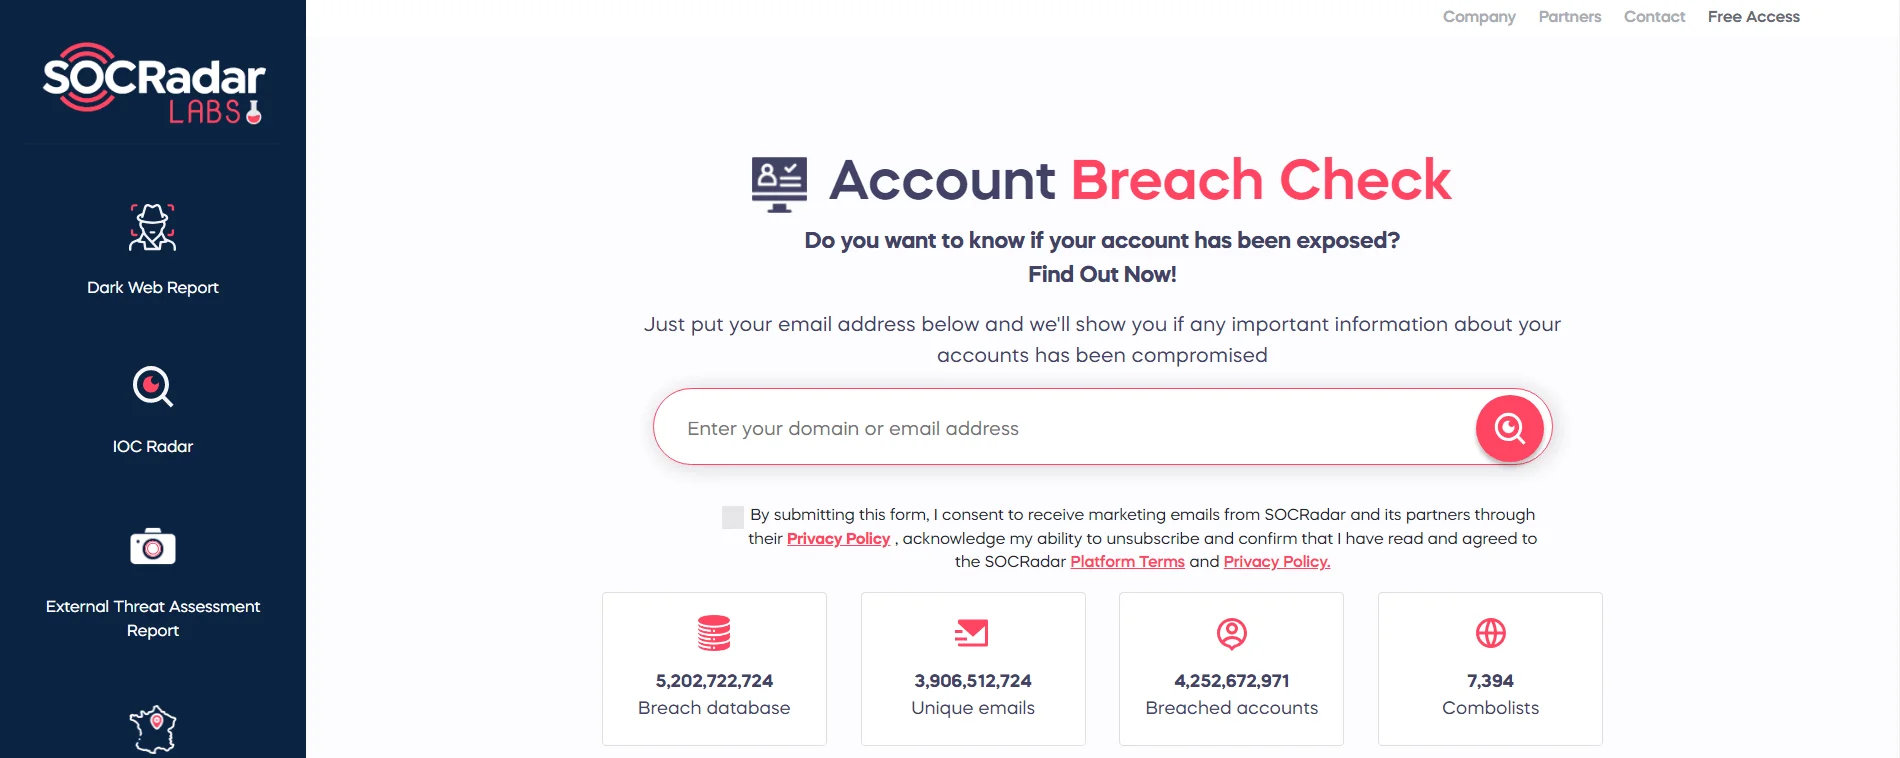 SOCRadar Labs’ Account Breach Check